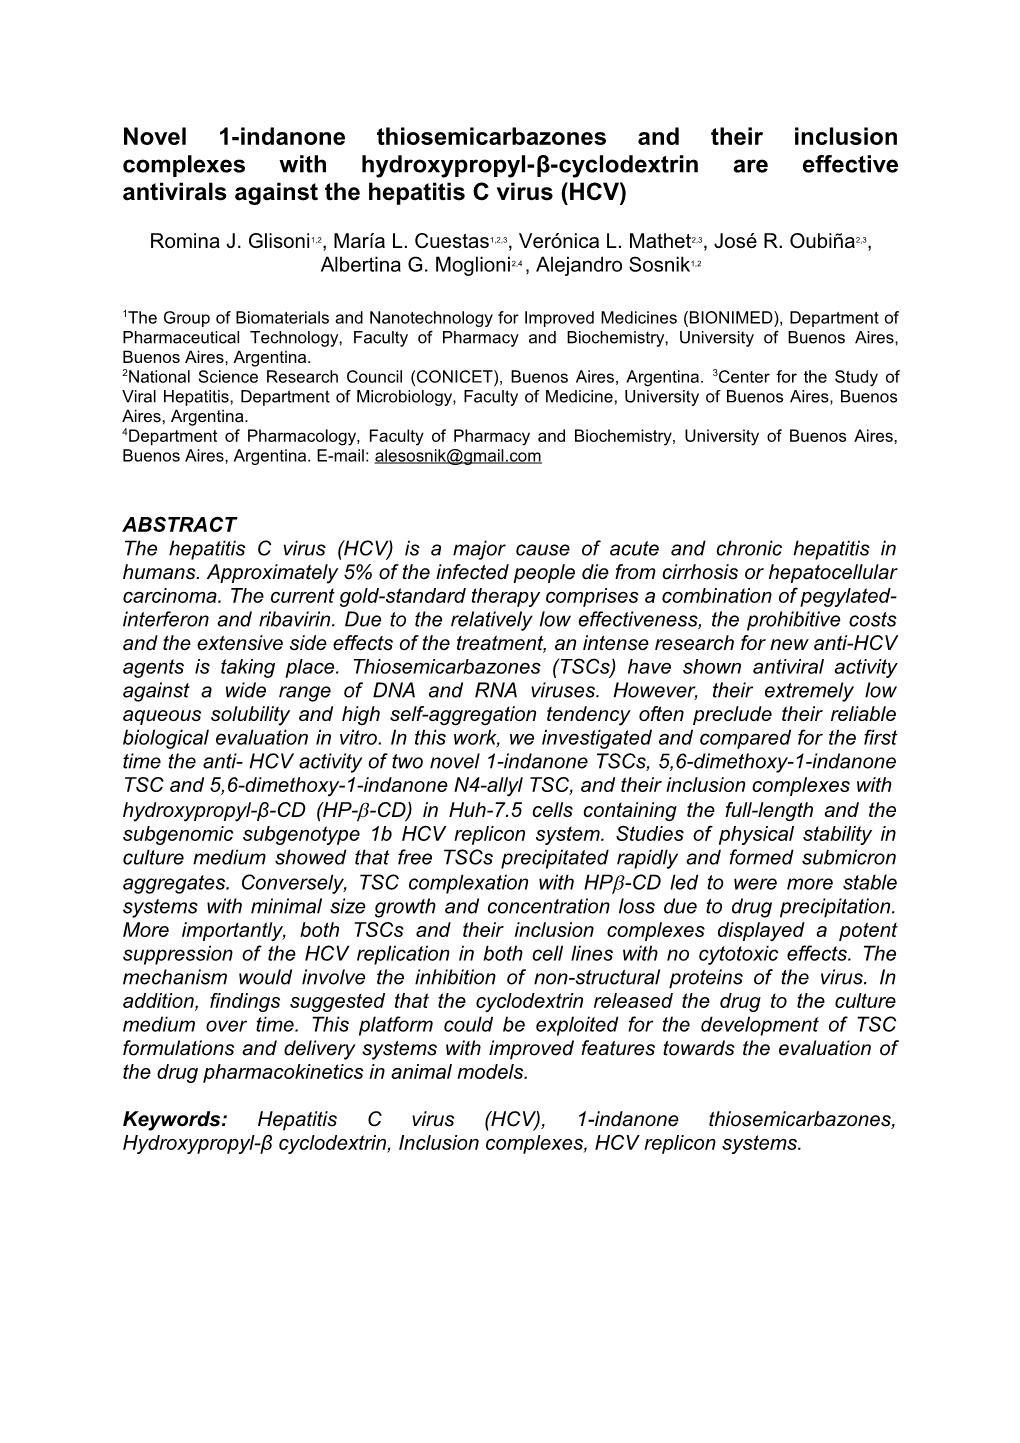 Antiviral Activity Against the Hepatitis C Virus (HCV) of Novel 1-Indanone Thiosemicarbazones